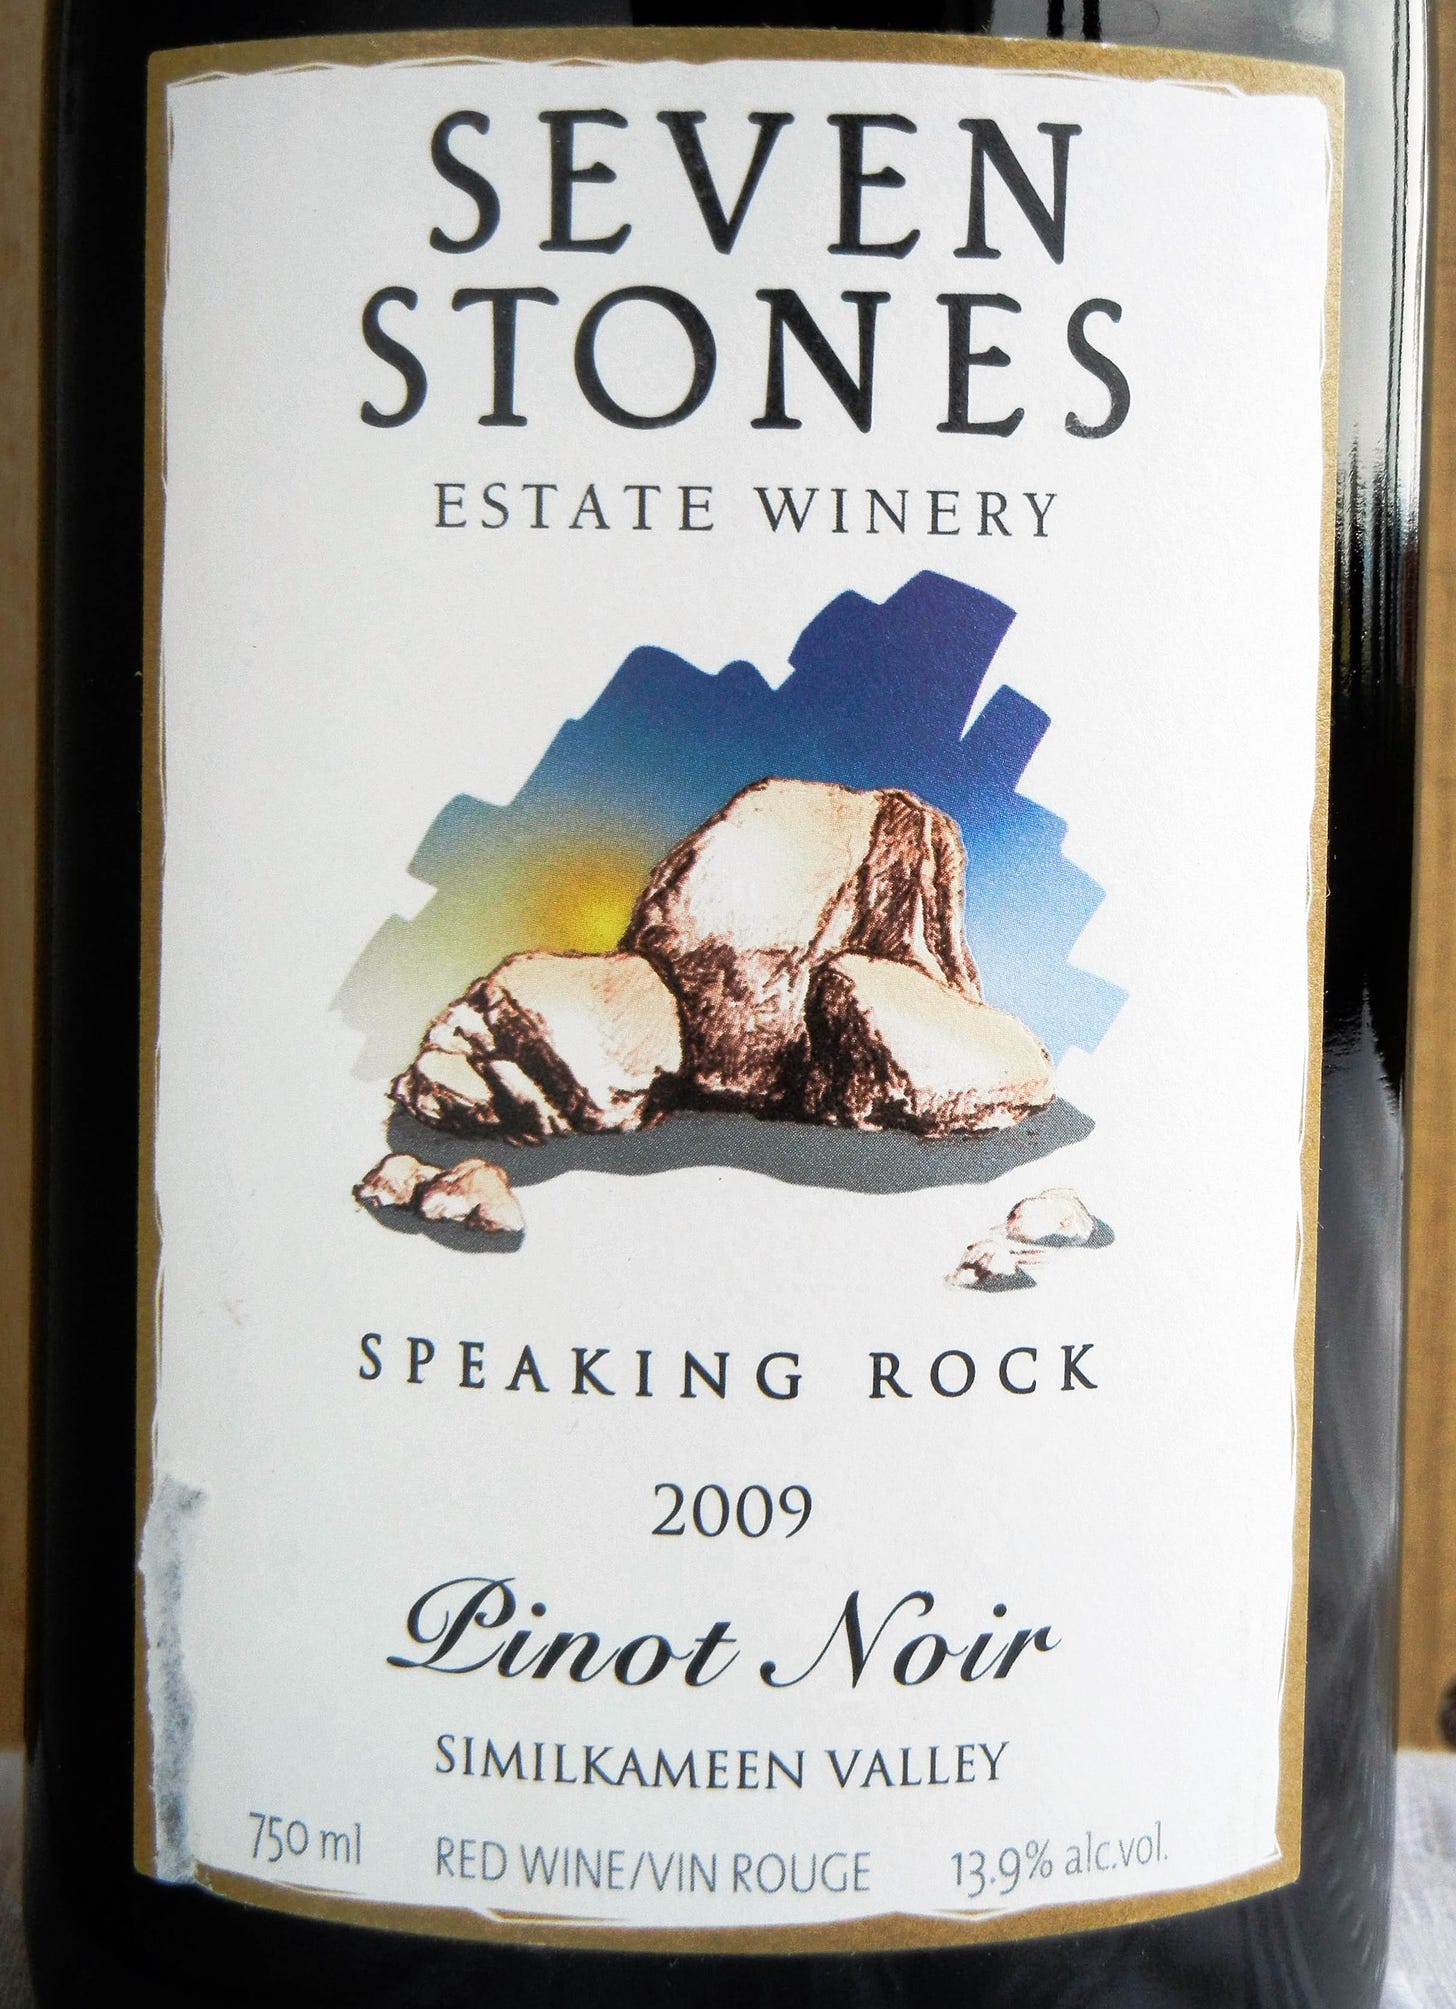 Seven Stones Pinot Noir 2009 Label - BC Pinot Noir Tasting Review 15